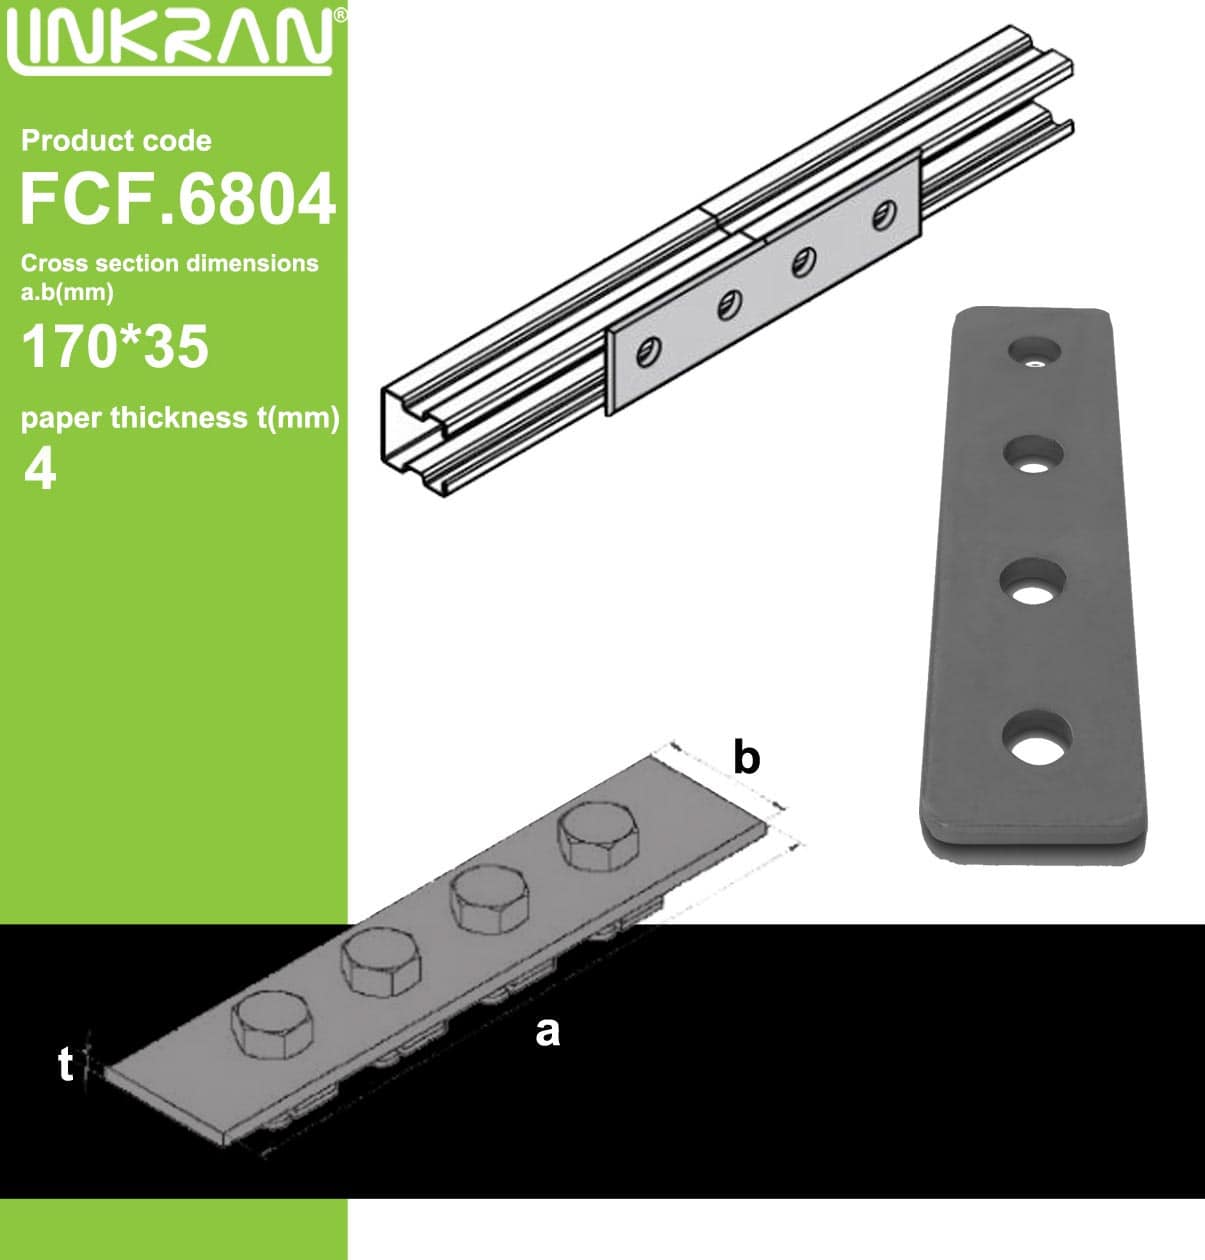 Four-hole belt - FCF.6804 - Linkran Industrial Group